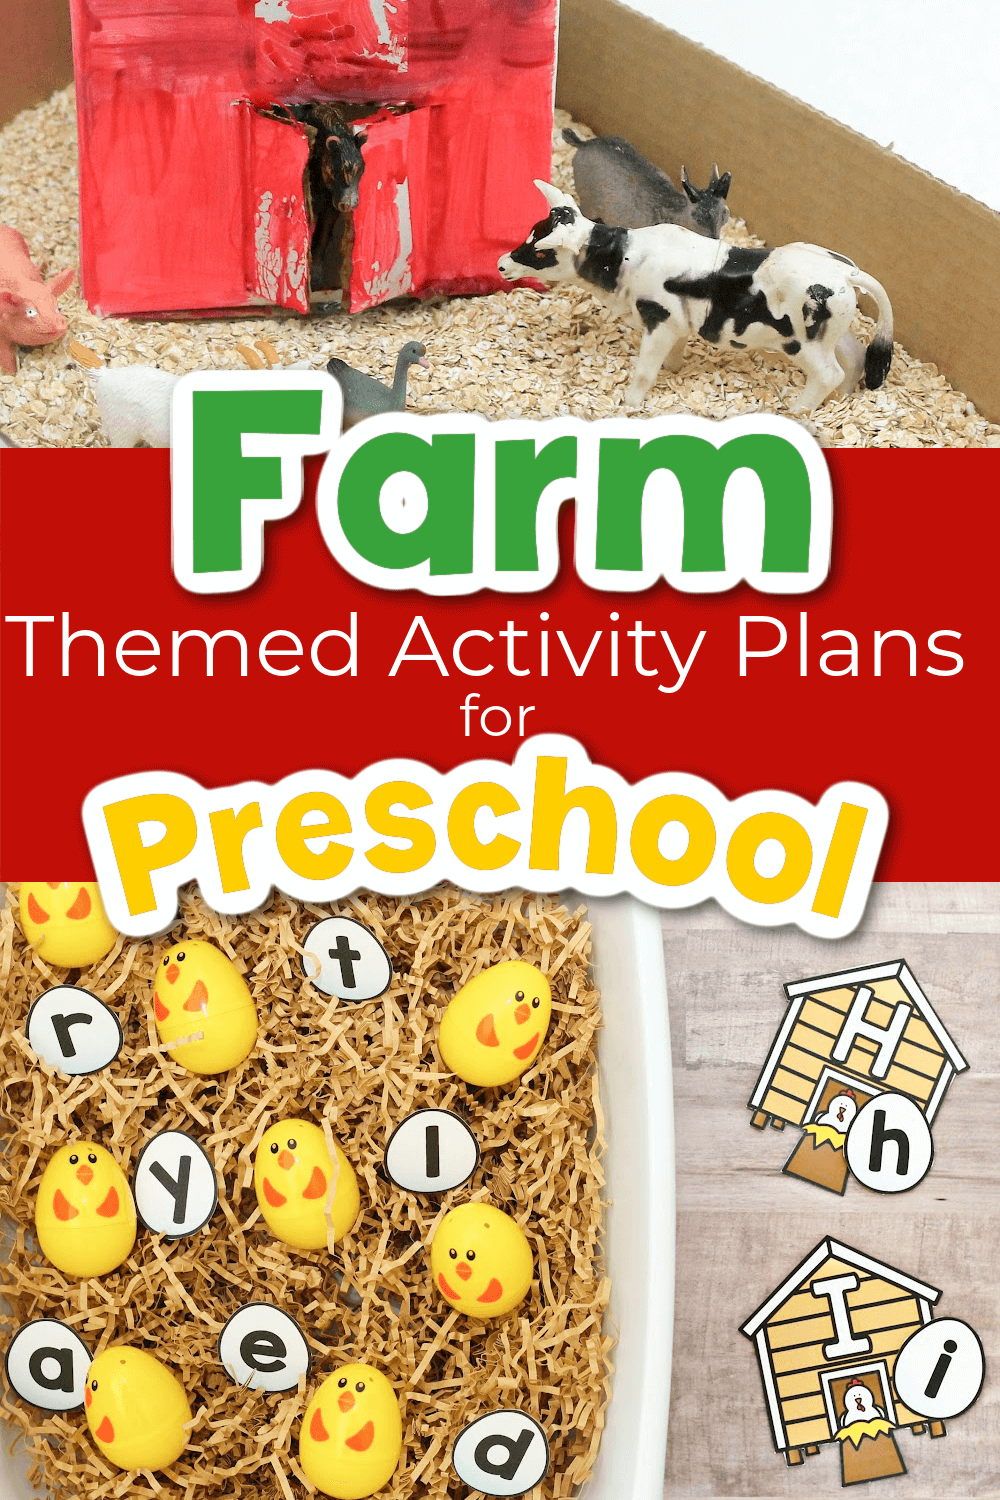 Farm themed preschool activity plans